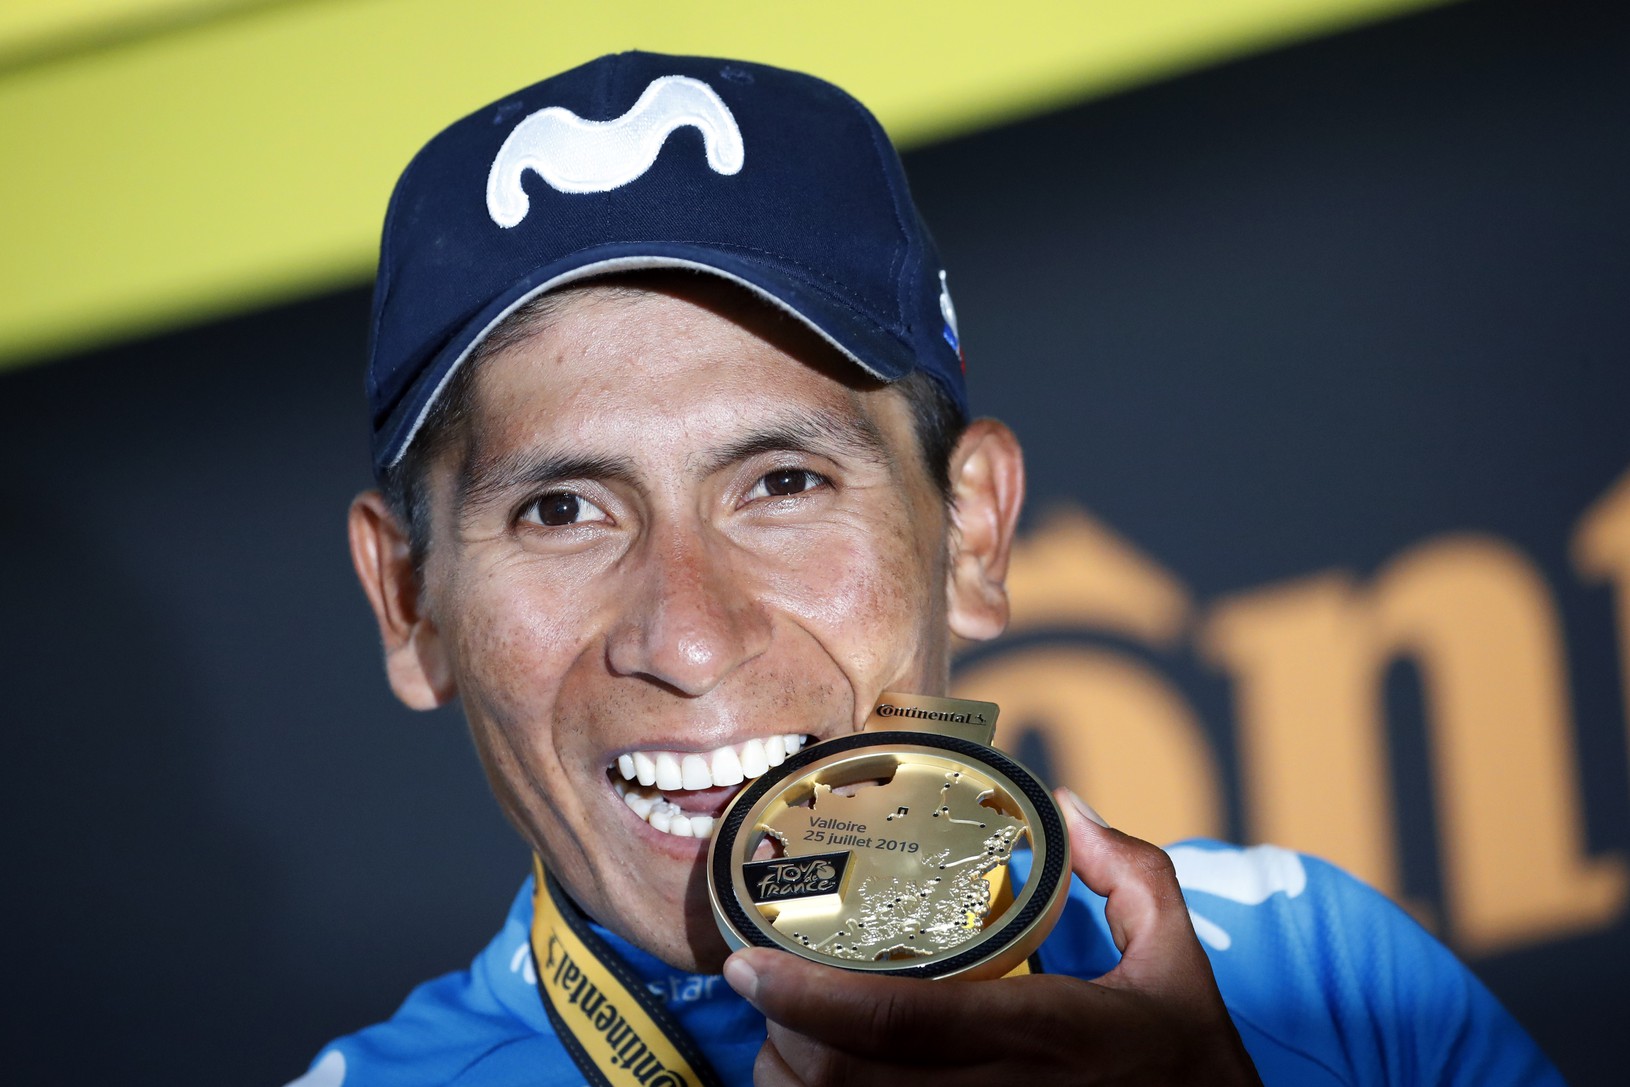 Kolumbijský cyklista Nairo Quintana